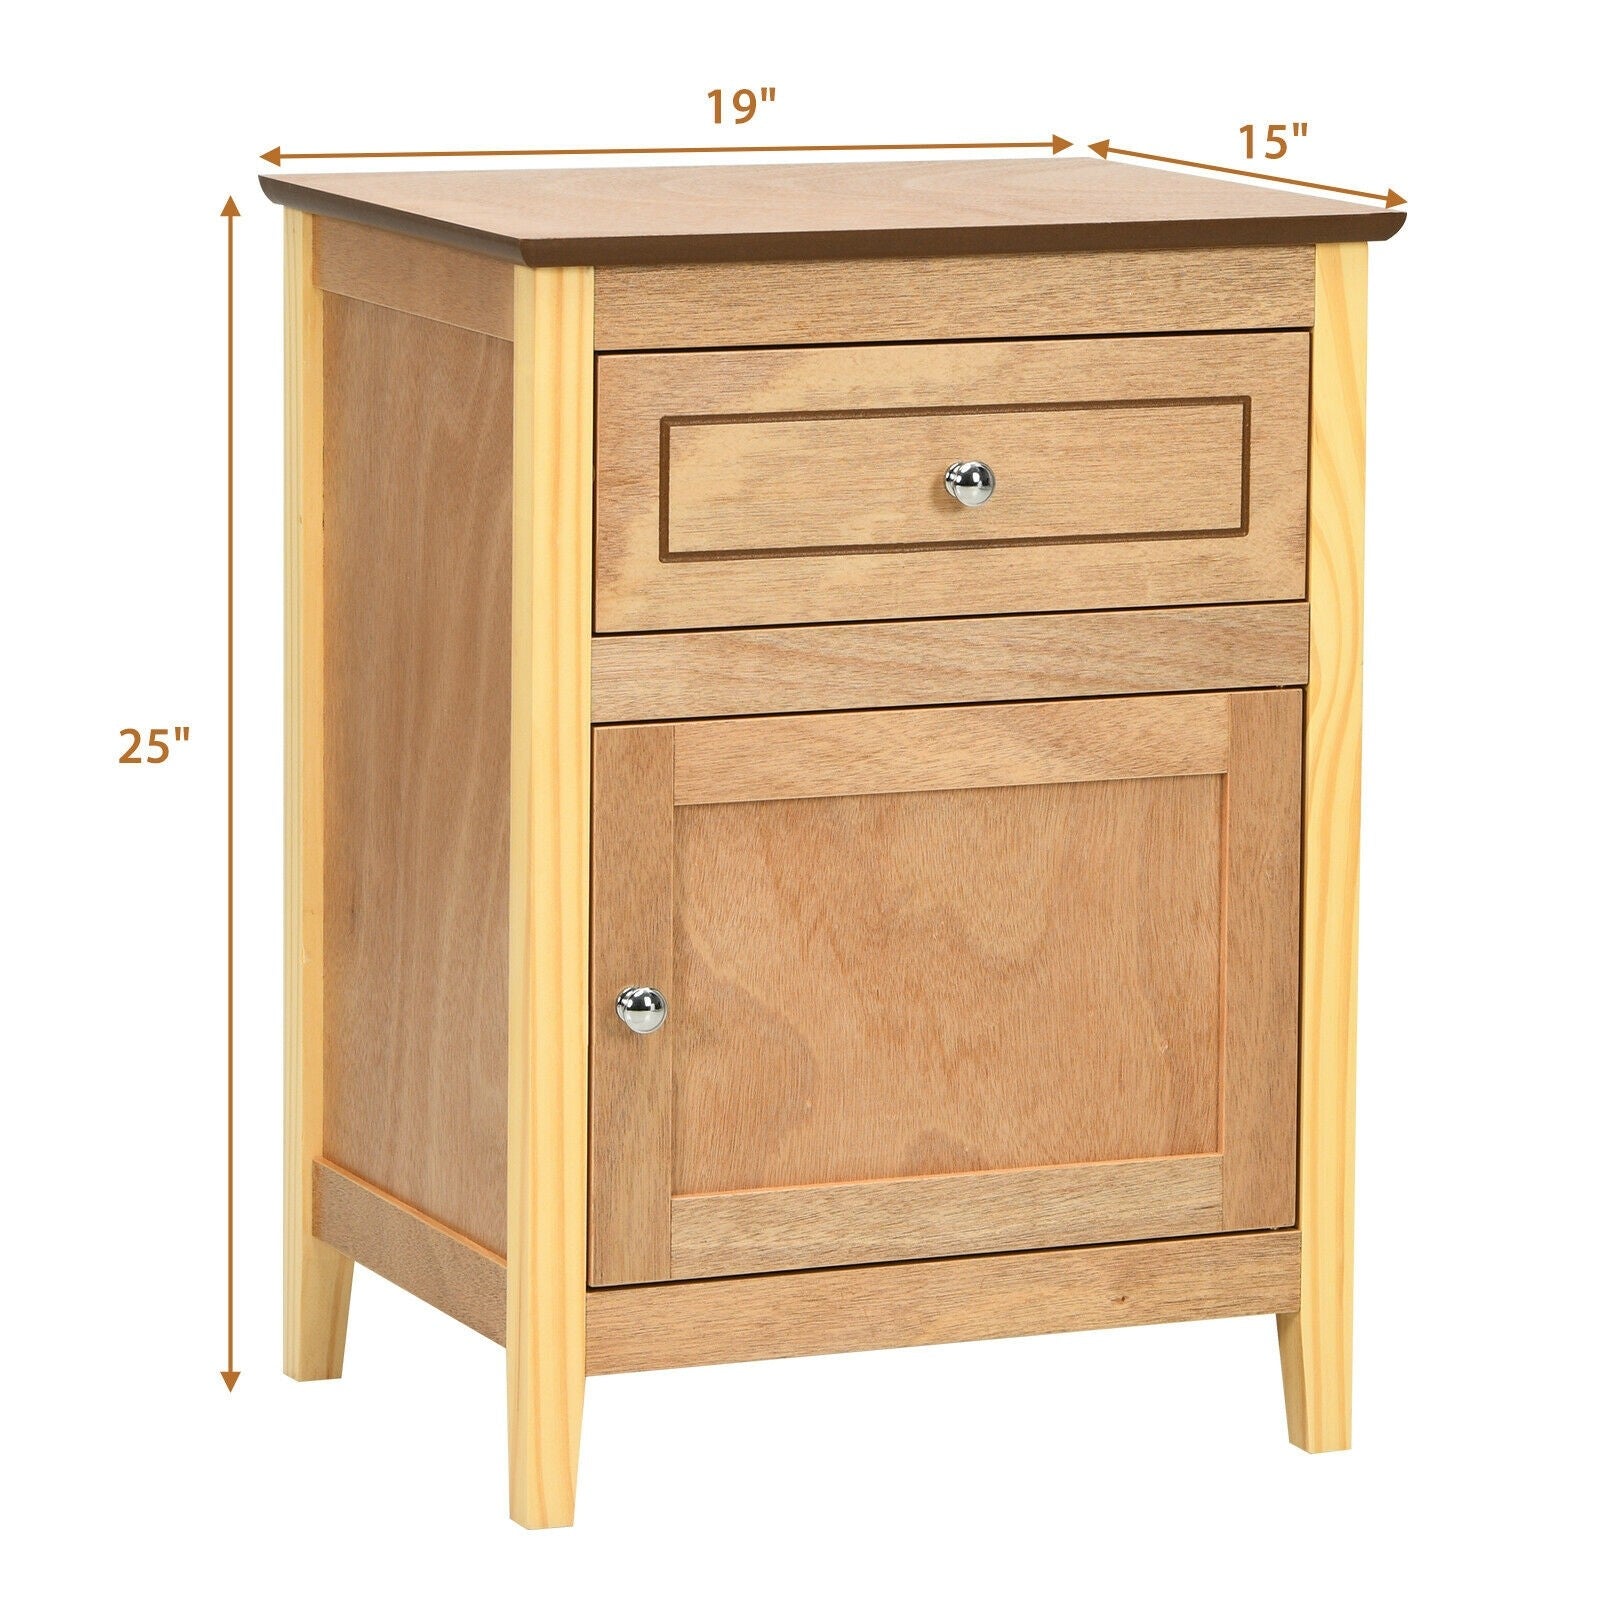 Wooden End Table W/Shelf - Giantex